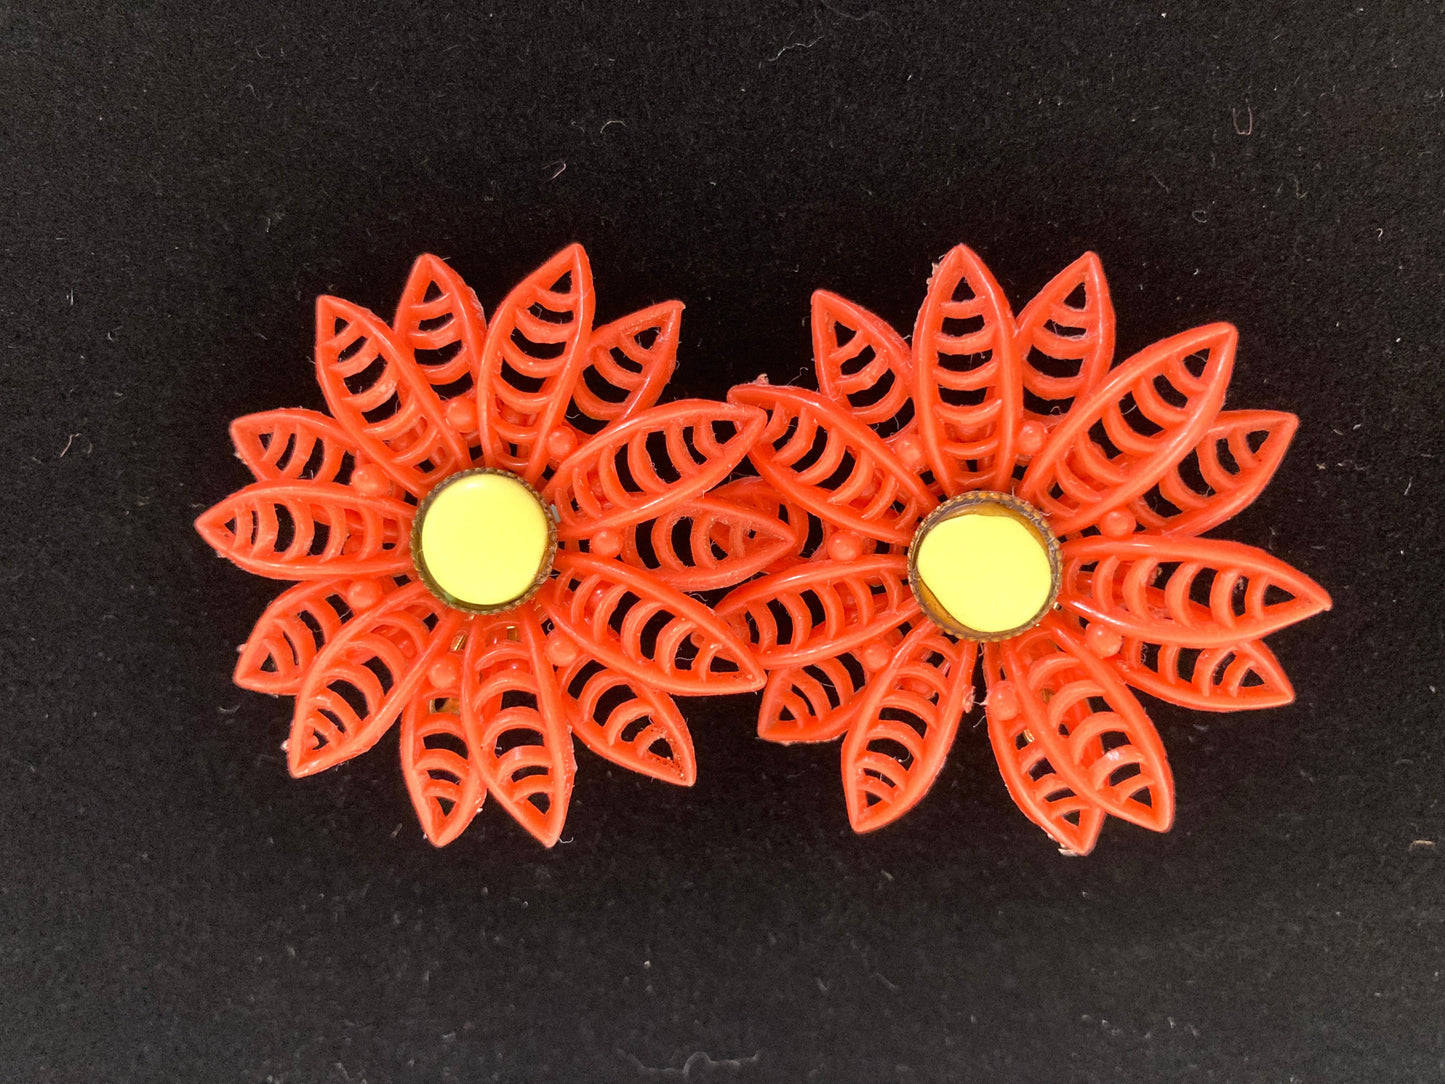 1950s Coral Soft Plastic Flower Earrings